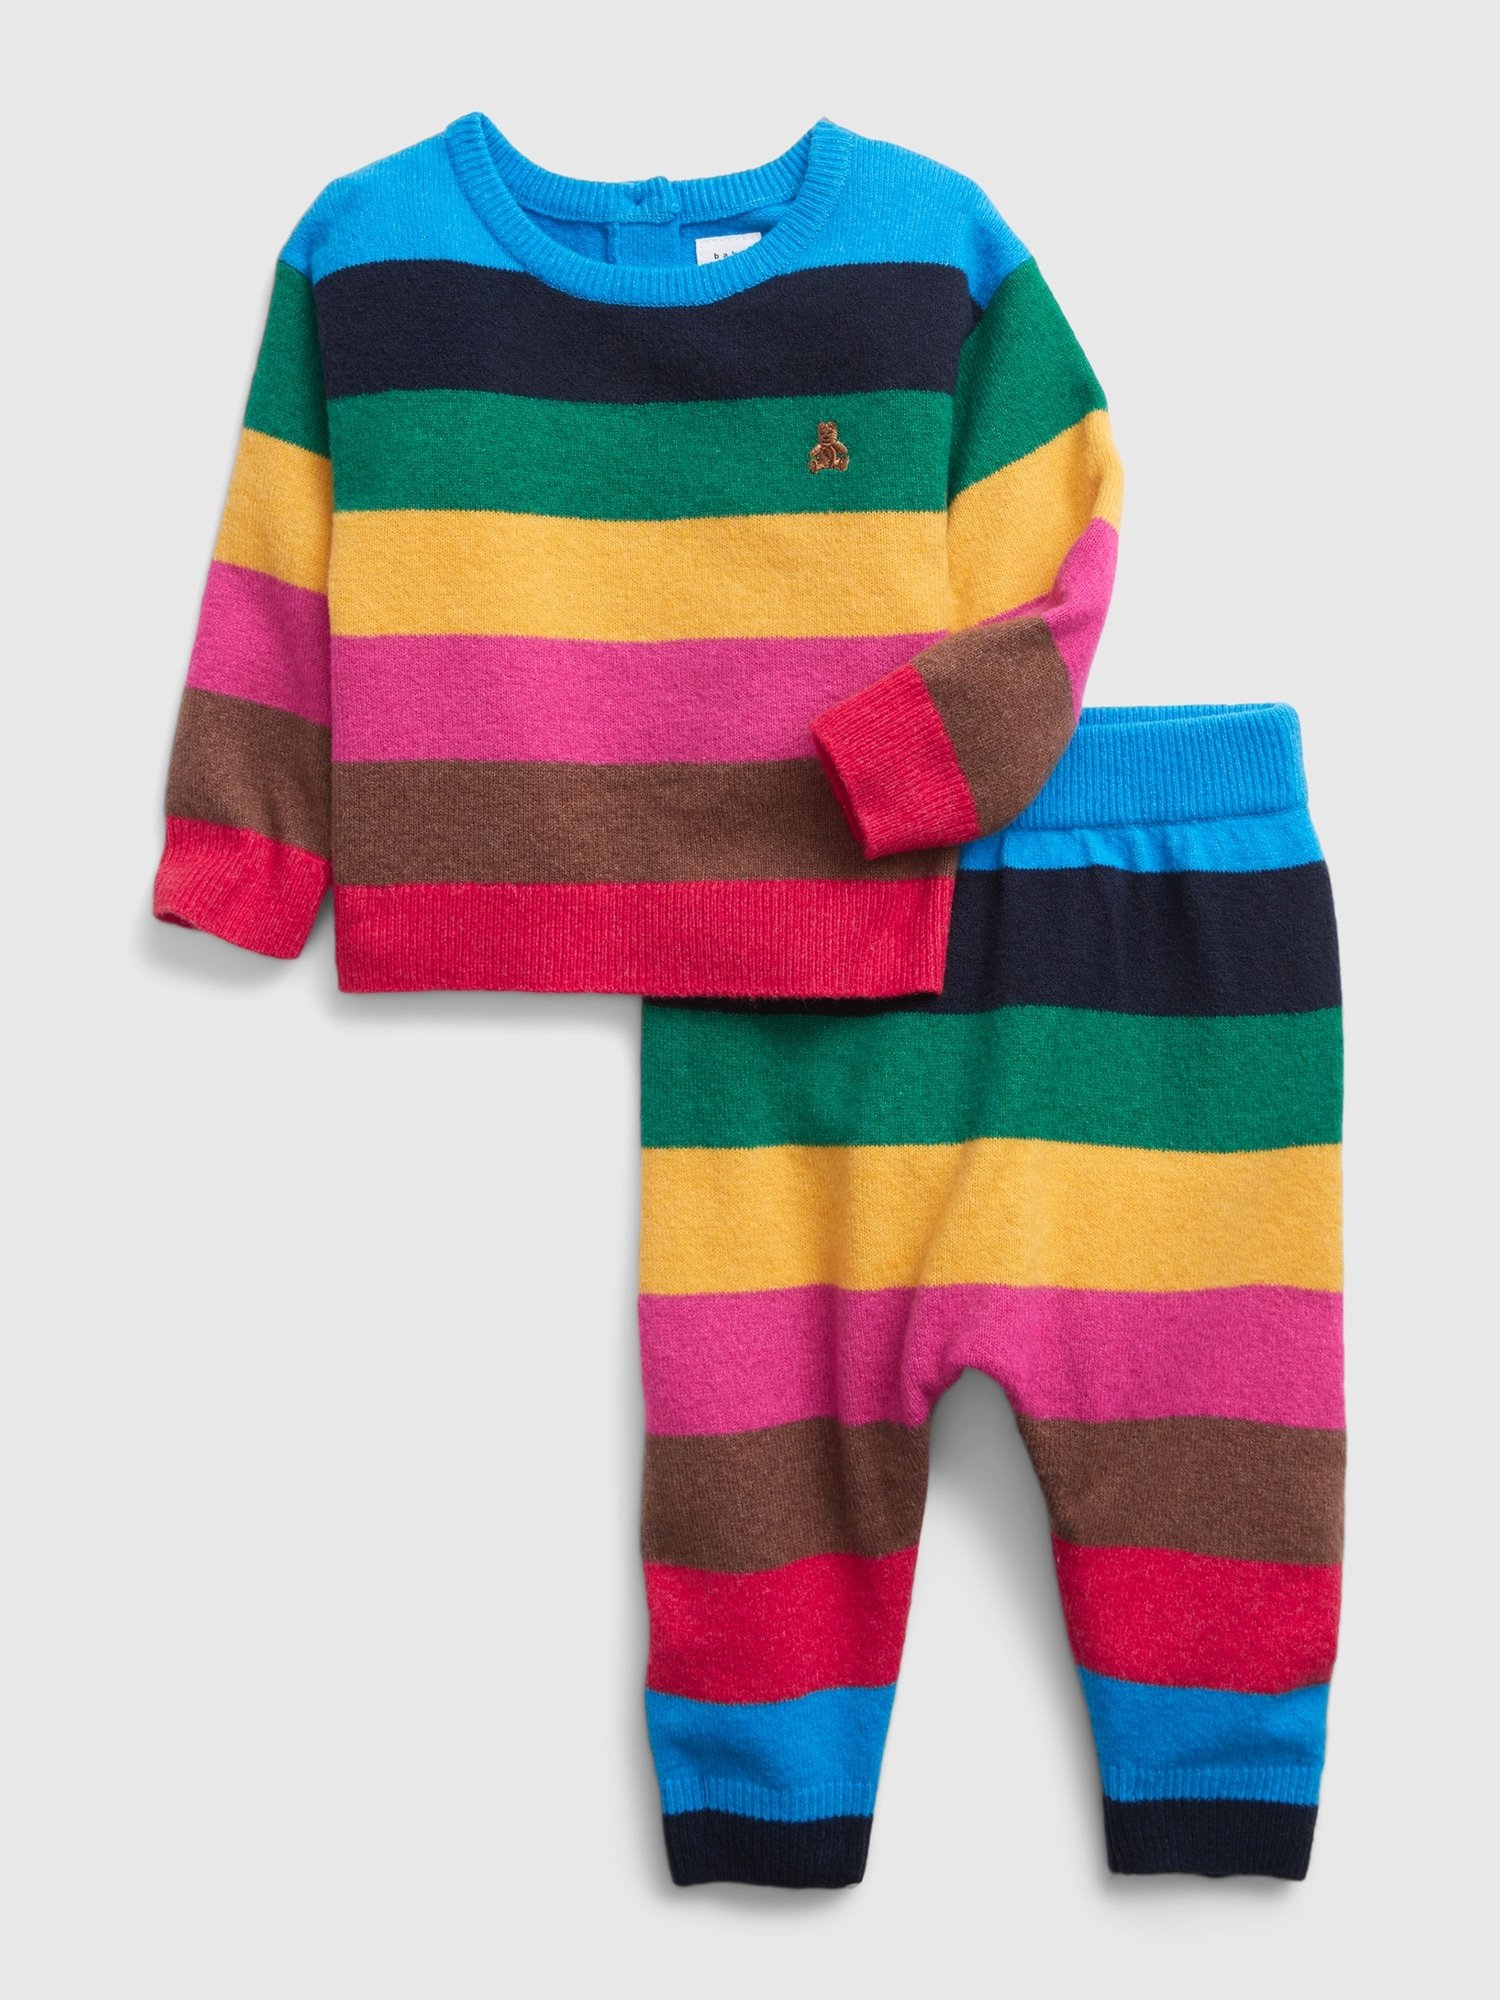 GAP Baby Happy Stripe Sweater Outfit Set P2450.jpg